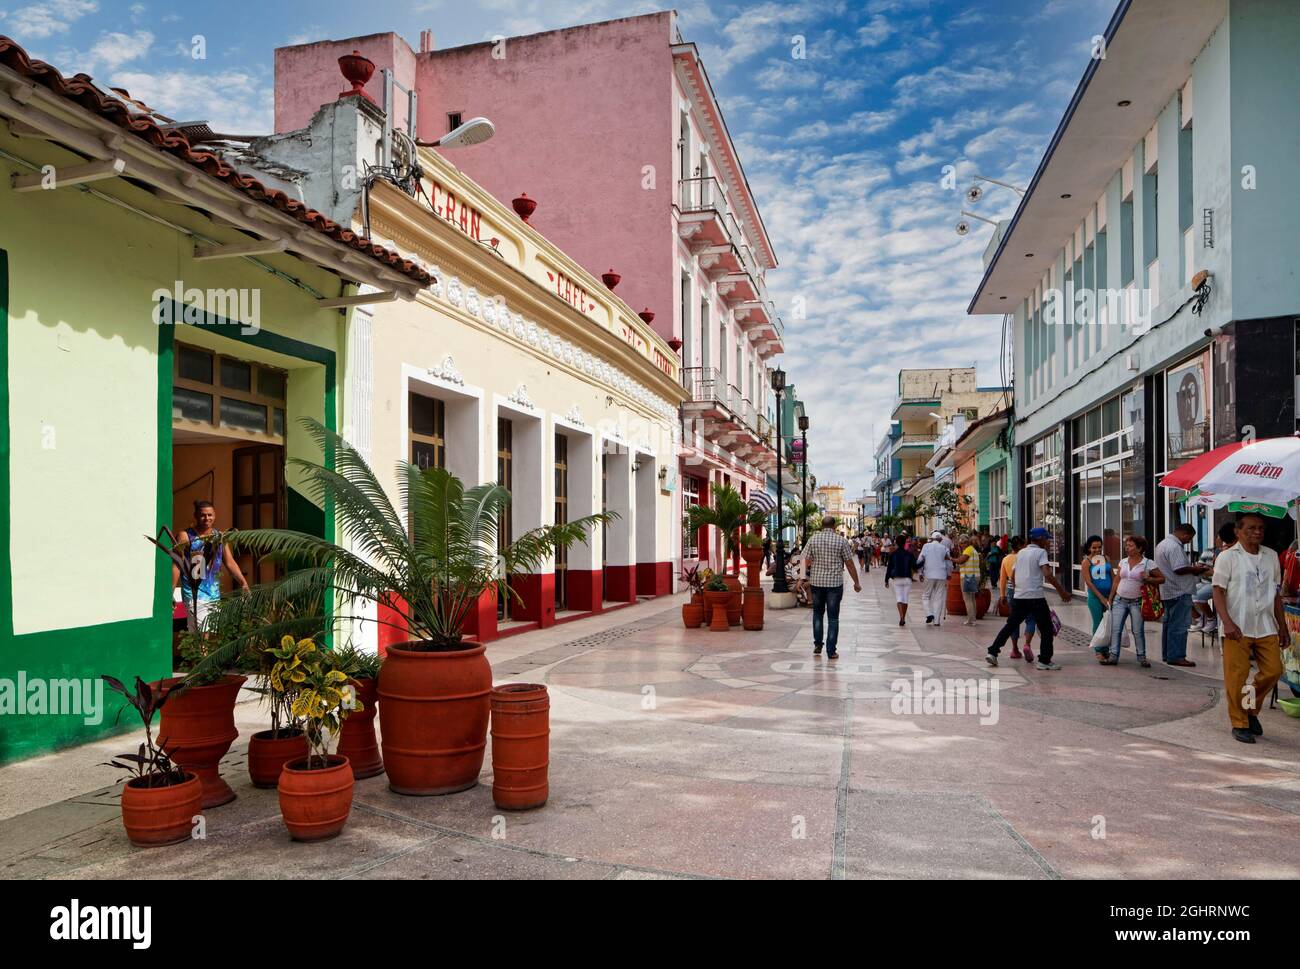 Street scene, business street, many people, Cubans, Sancti Spiritus, Central Cuba, Sancti Spiritus Province, Caribbean, Cuba Stock Photo